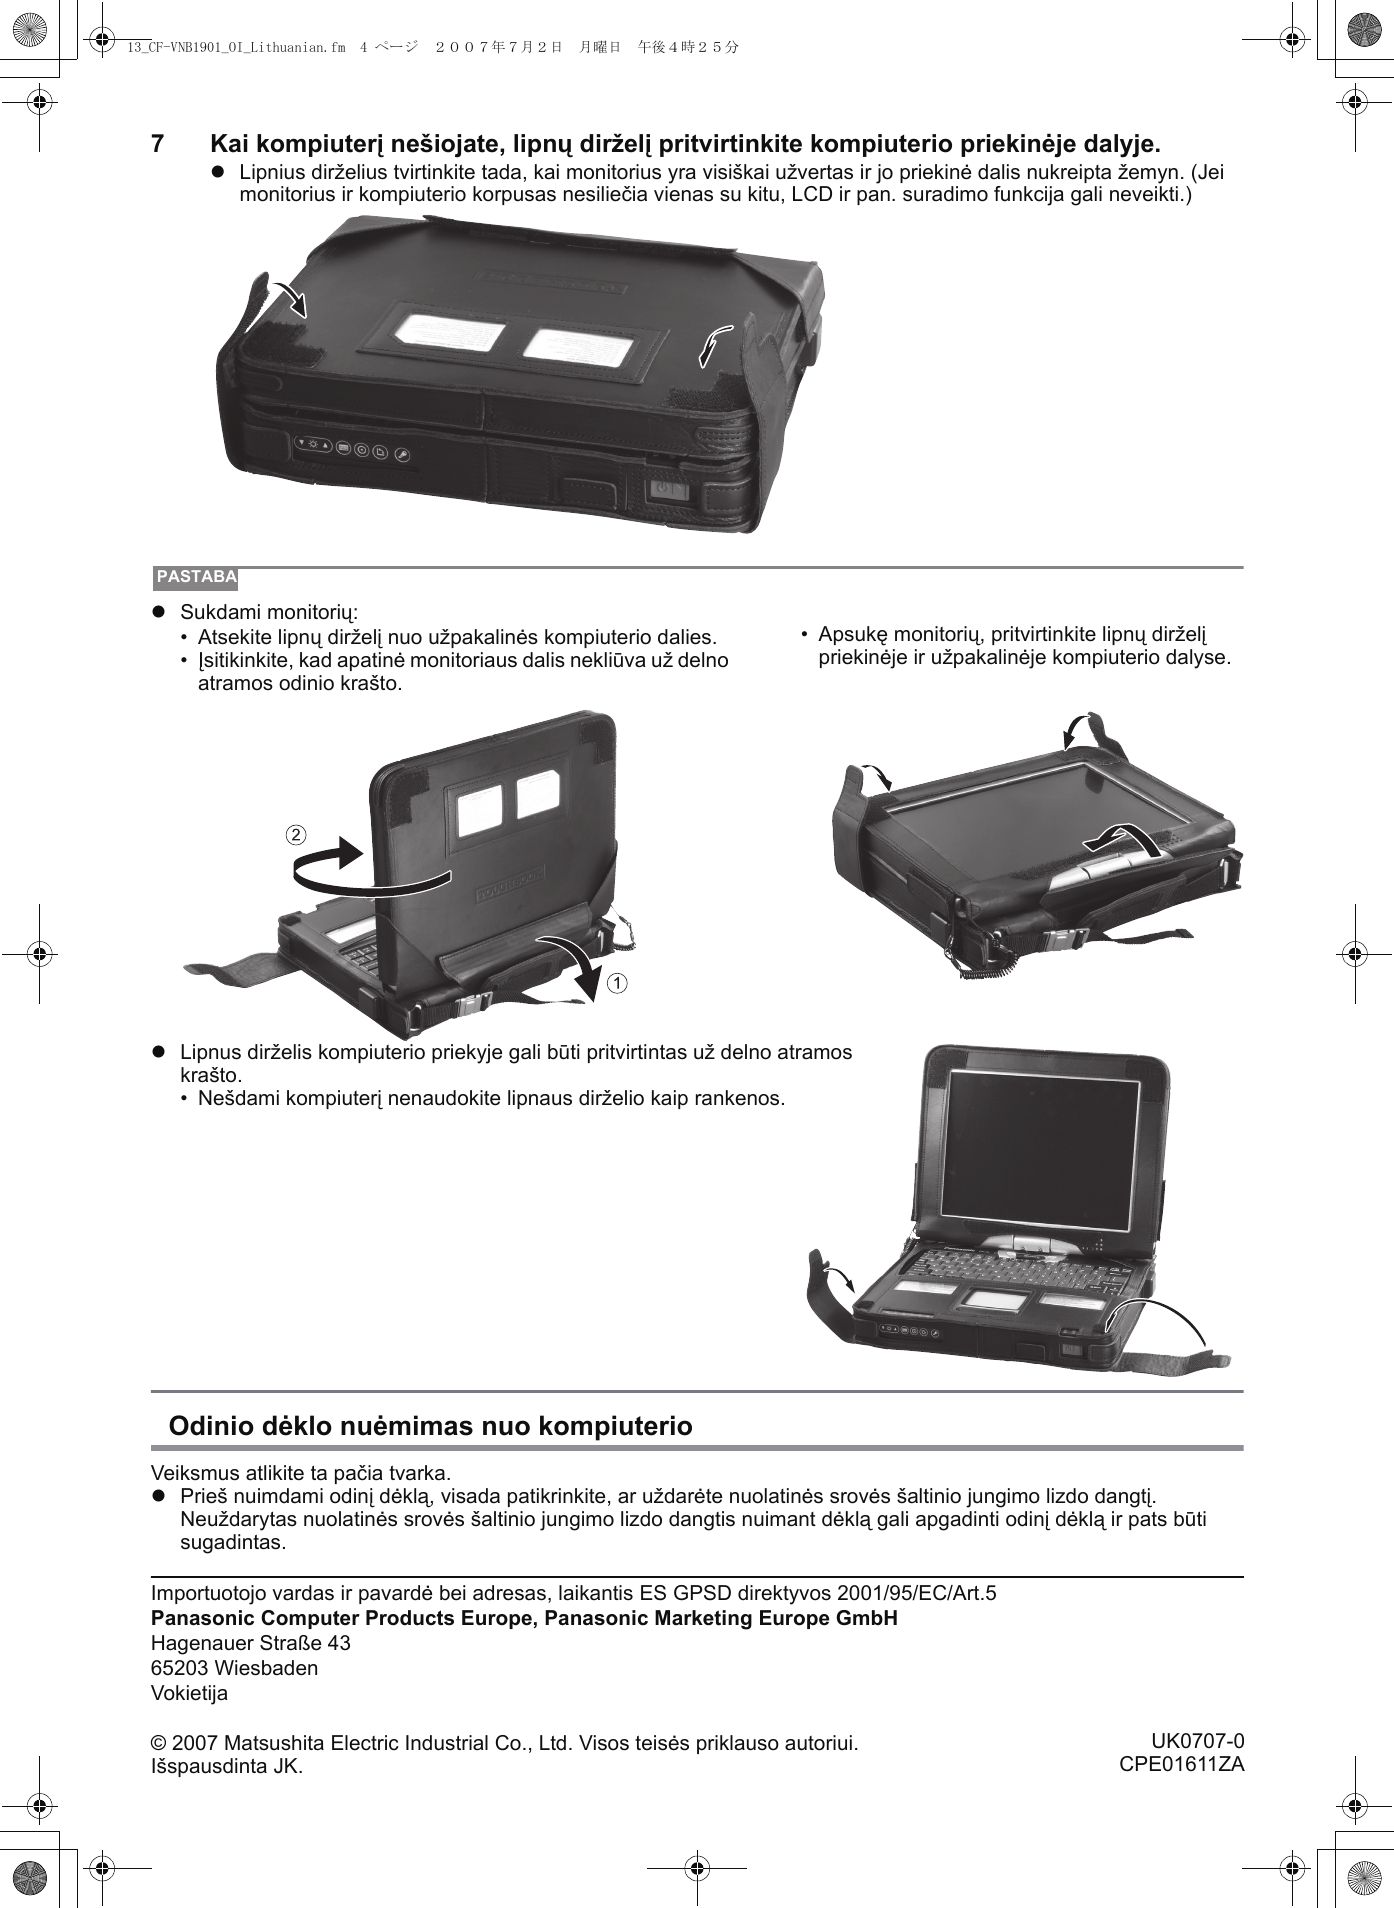 Page 4 of 4 - Panasonic CF-VNBxxxx (Leather Case) NAUDOJIMO INSTRUKCIJOS User Manual : Operating Instructions (Lithuanian) VNB1901-oi-cpe01611za-non-nonlogo-LT-p20070494